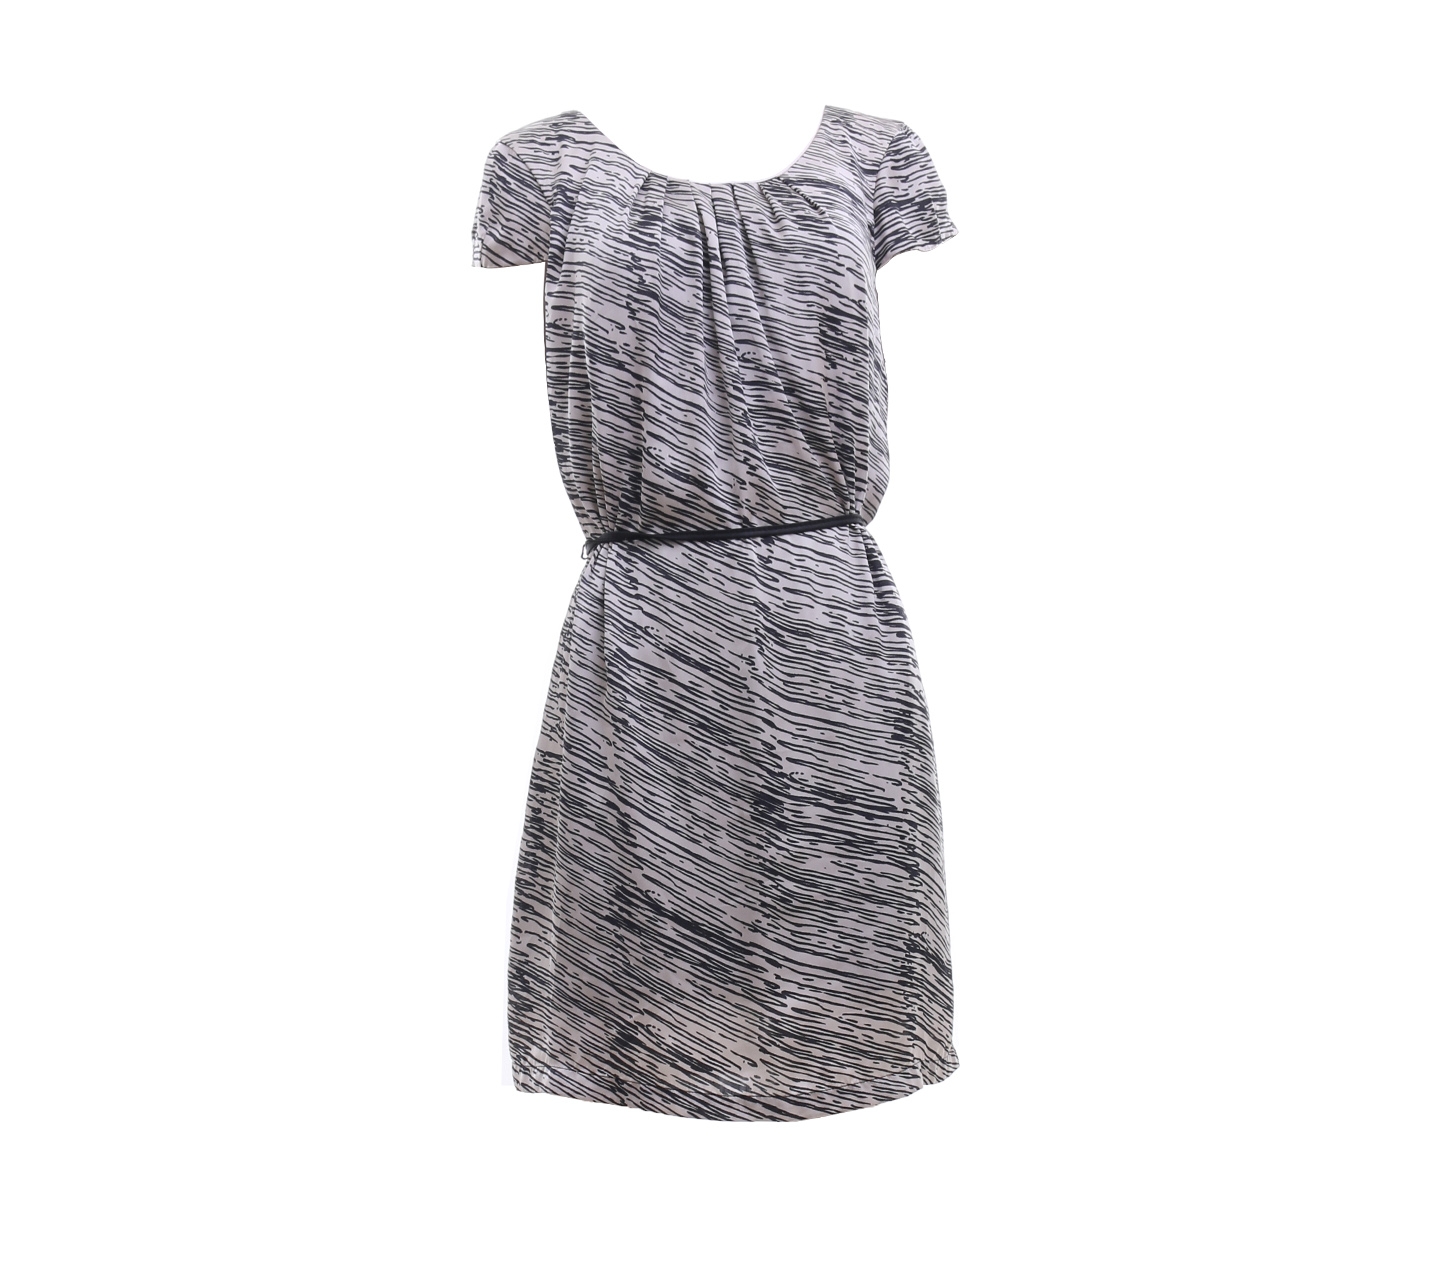 H&M Patterned Grey Black Mini Dress